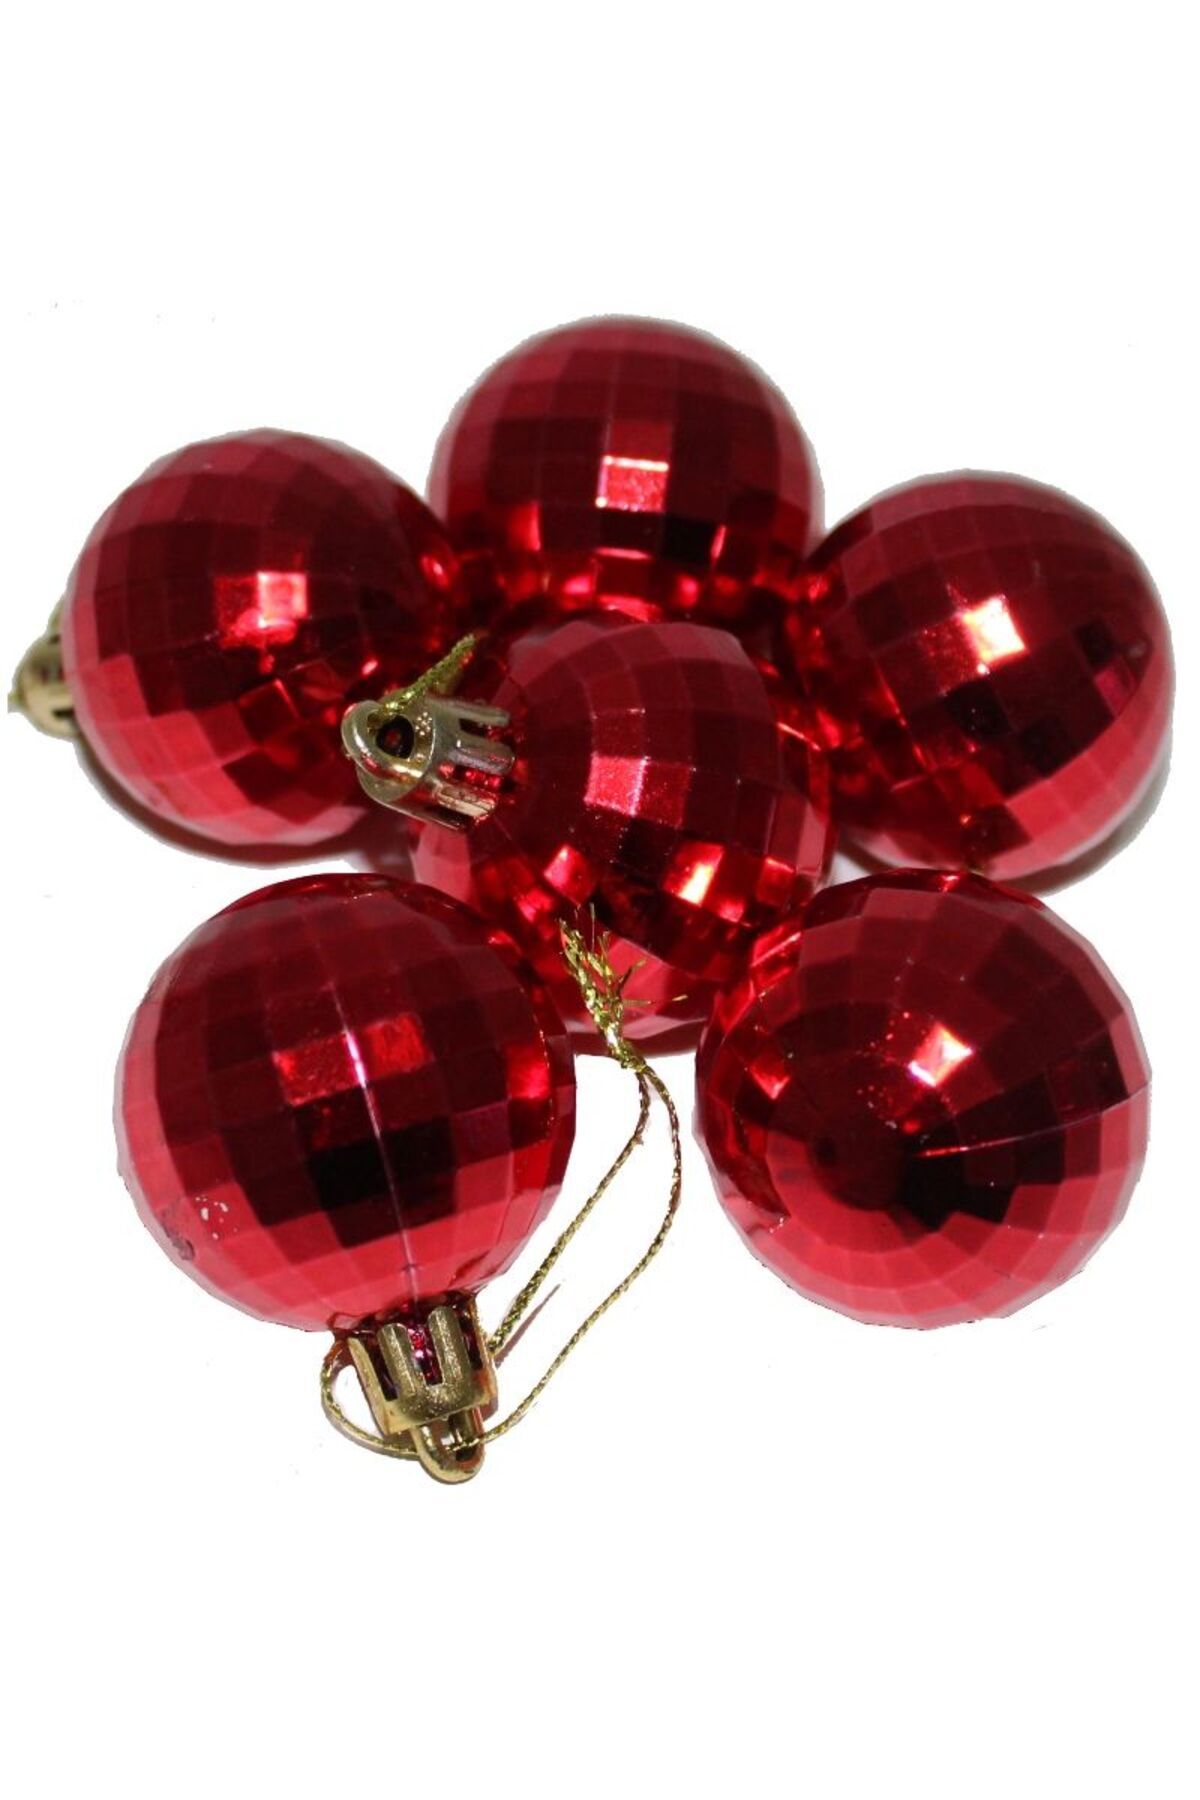 partidolu Plastik Kristal Disko Topu Kırmızı Renk Yılbaşı Ağacı Süsü 6 Adet 4 Cm